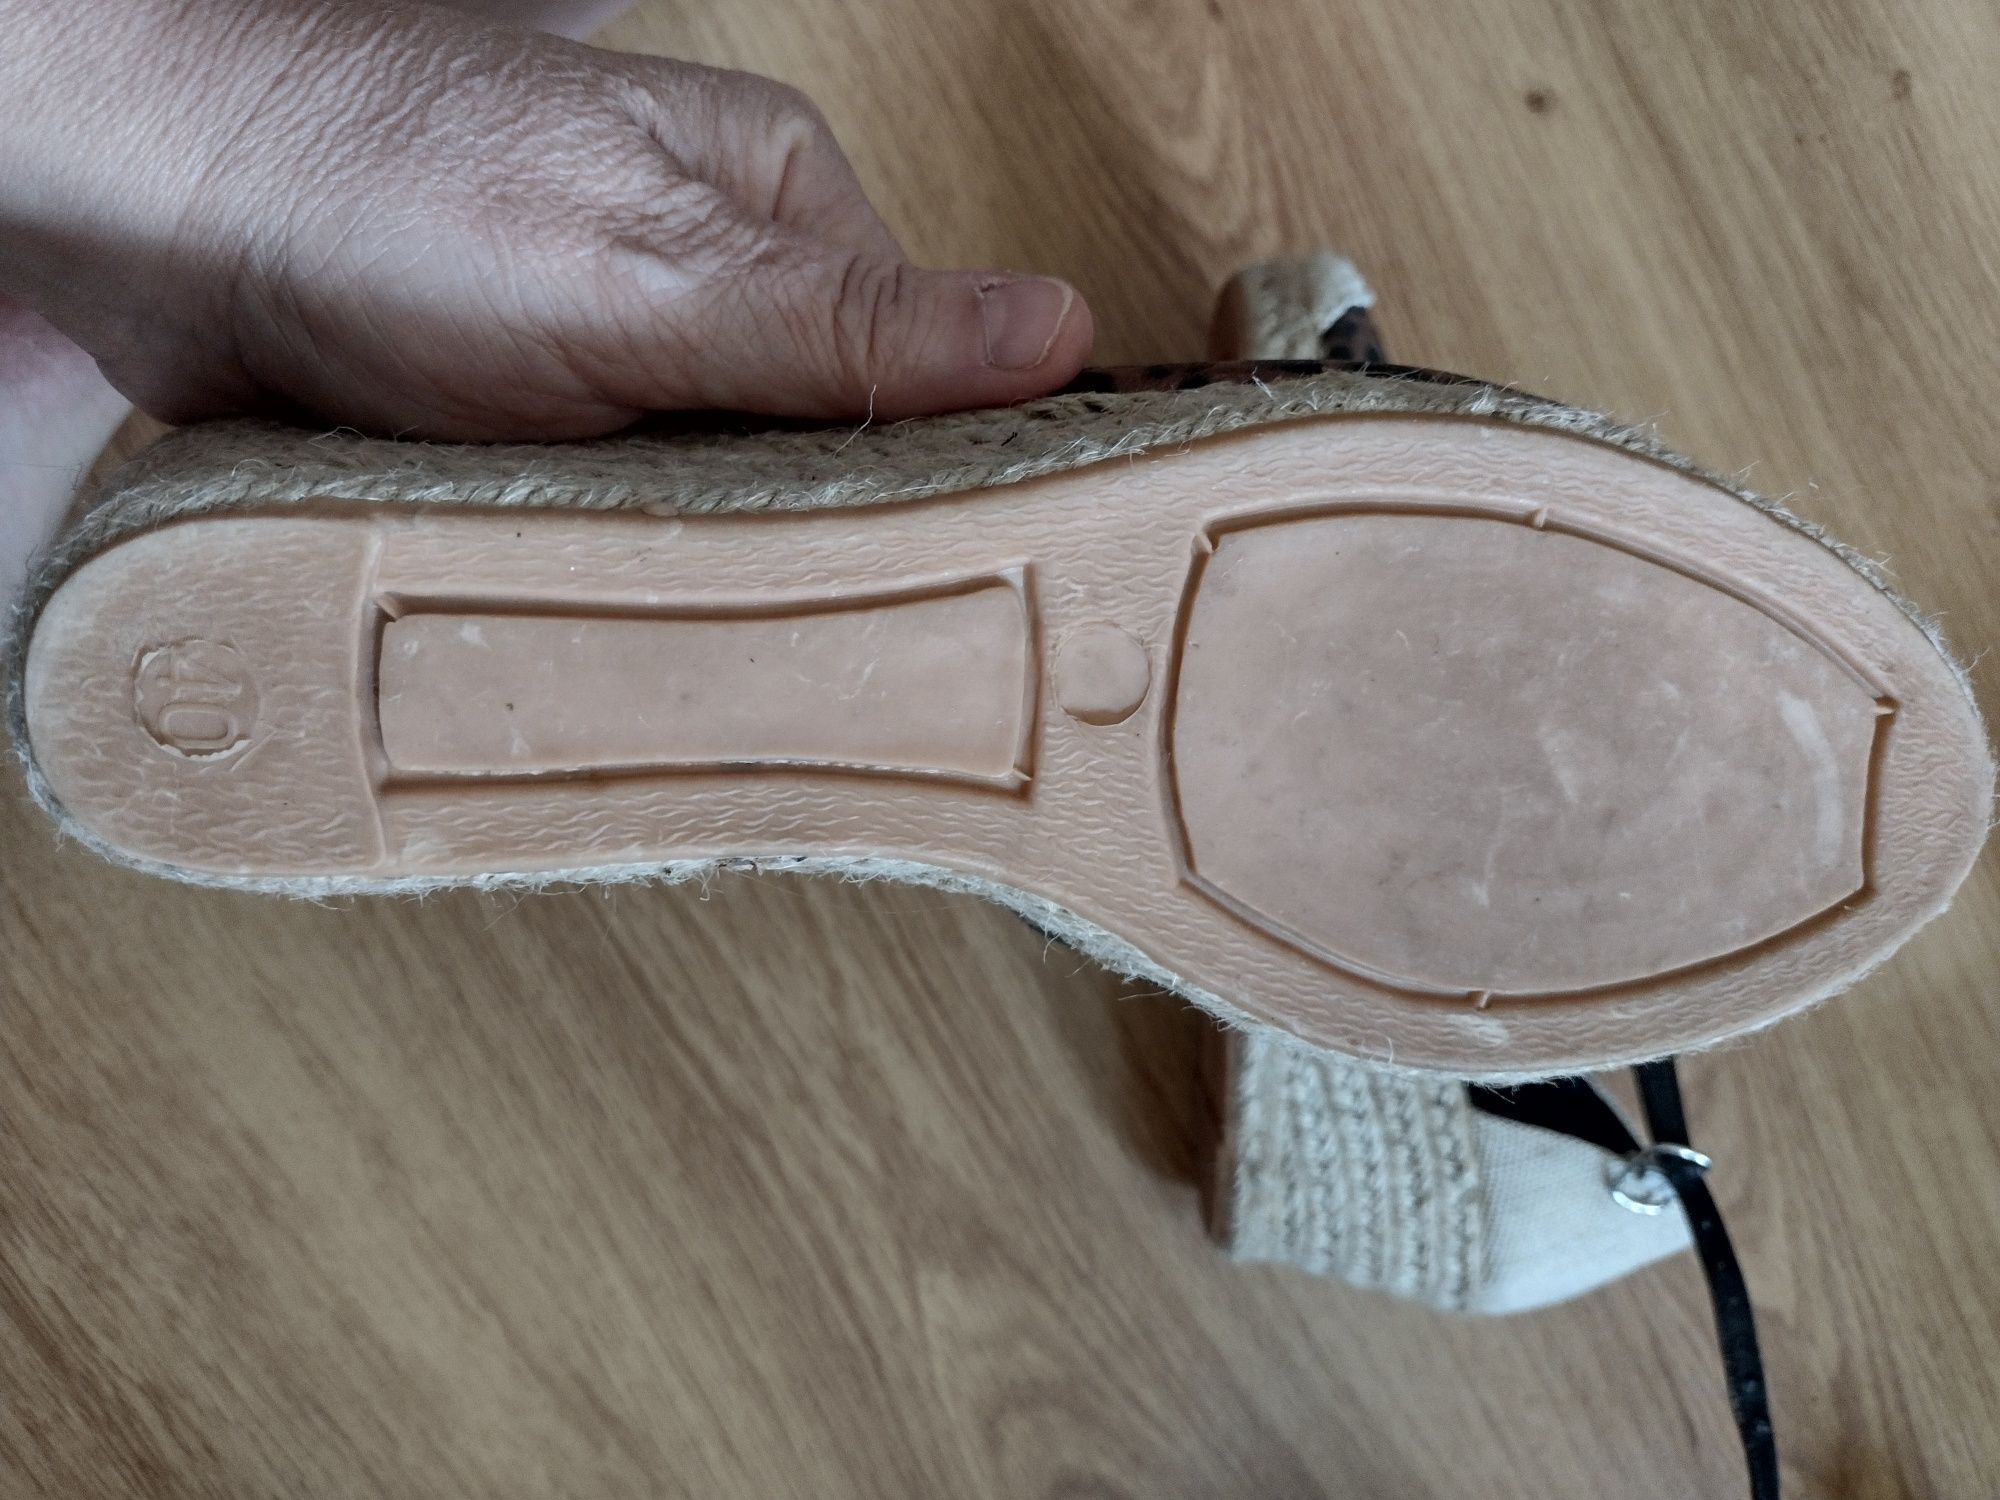 Nowe sandałki espadryle panterka bluebox 40 wkl. 25.5 cm